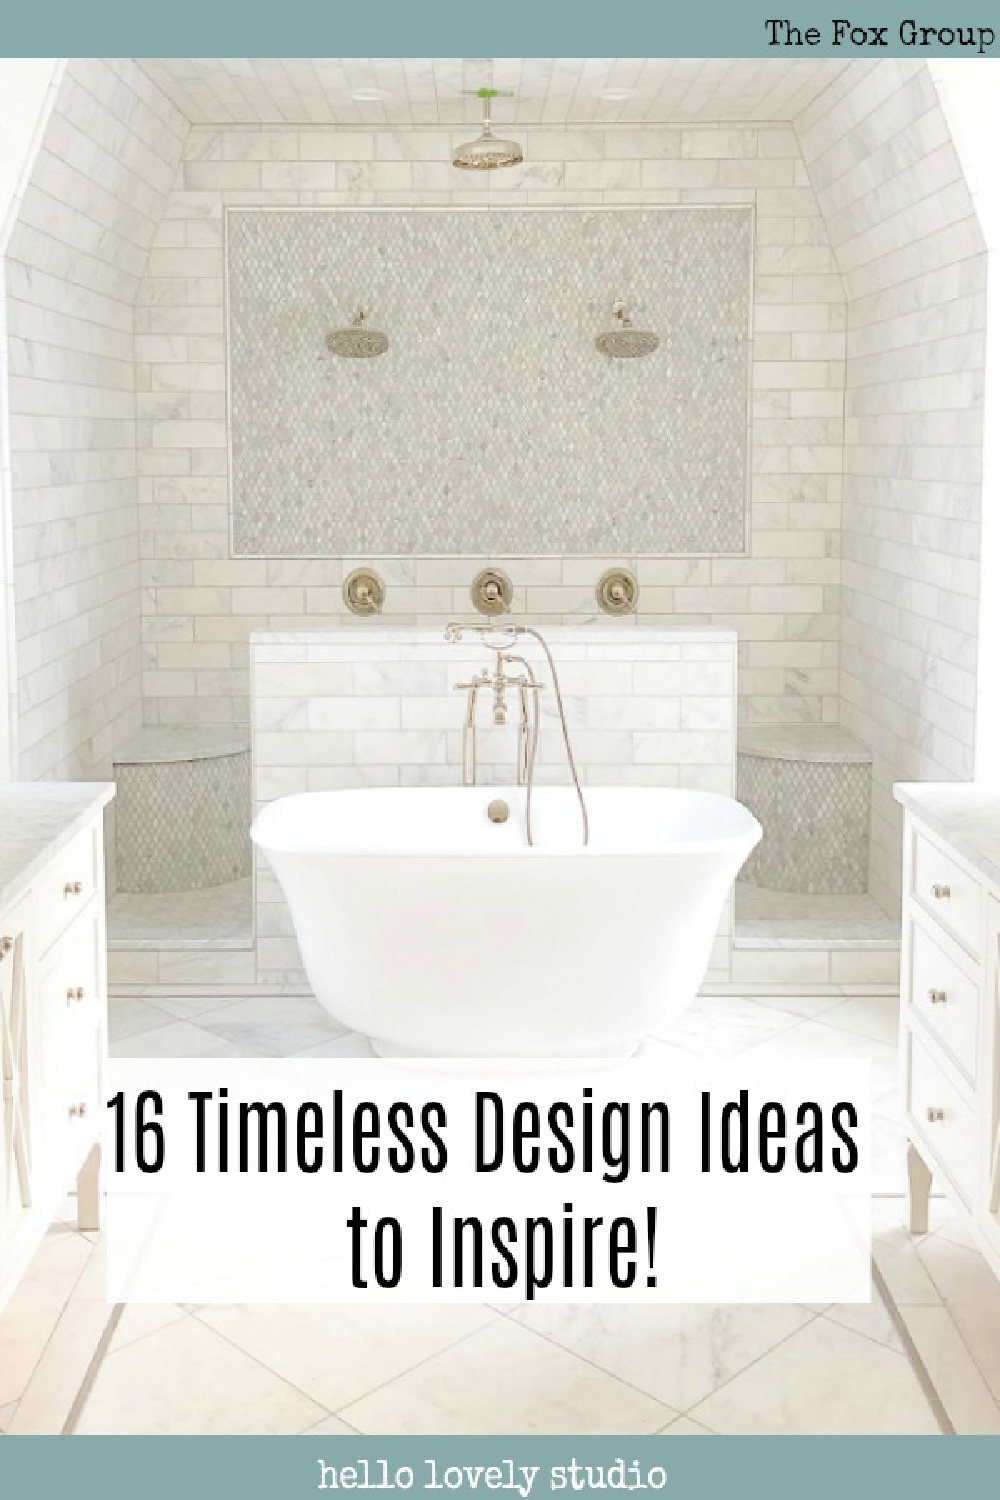 16 Timeless Design Ideas to Inspire! #thefoxgroup #timelessdesign #interiordesigninspiration